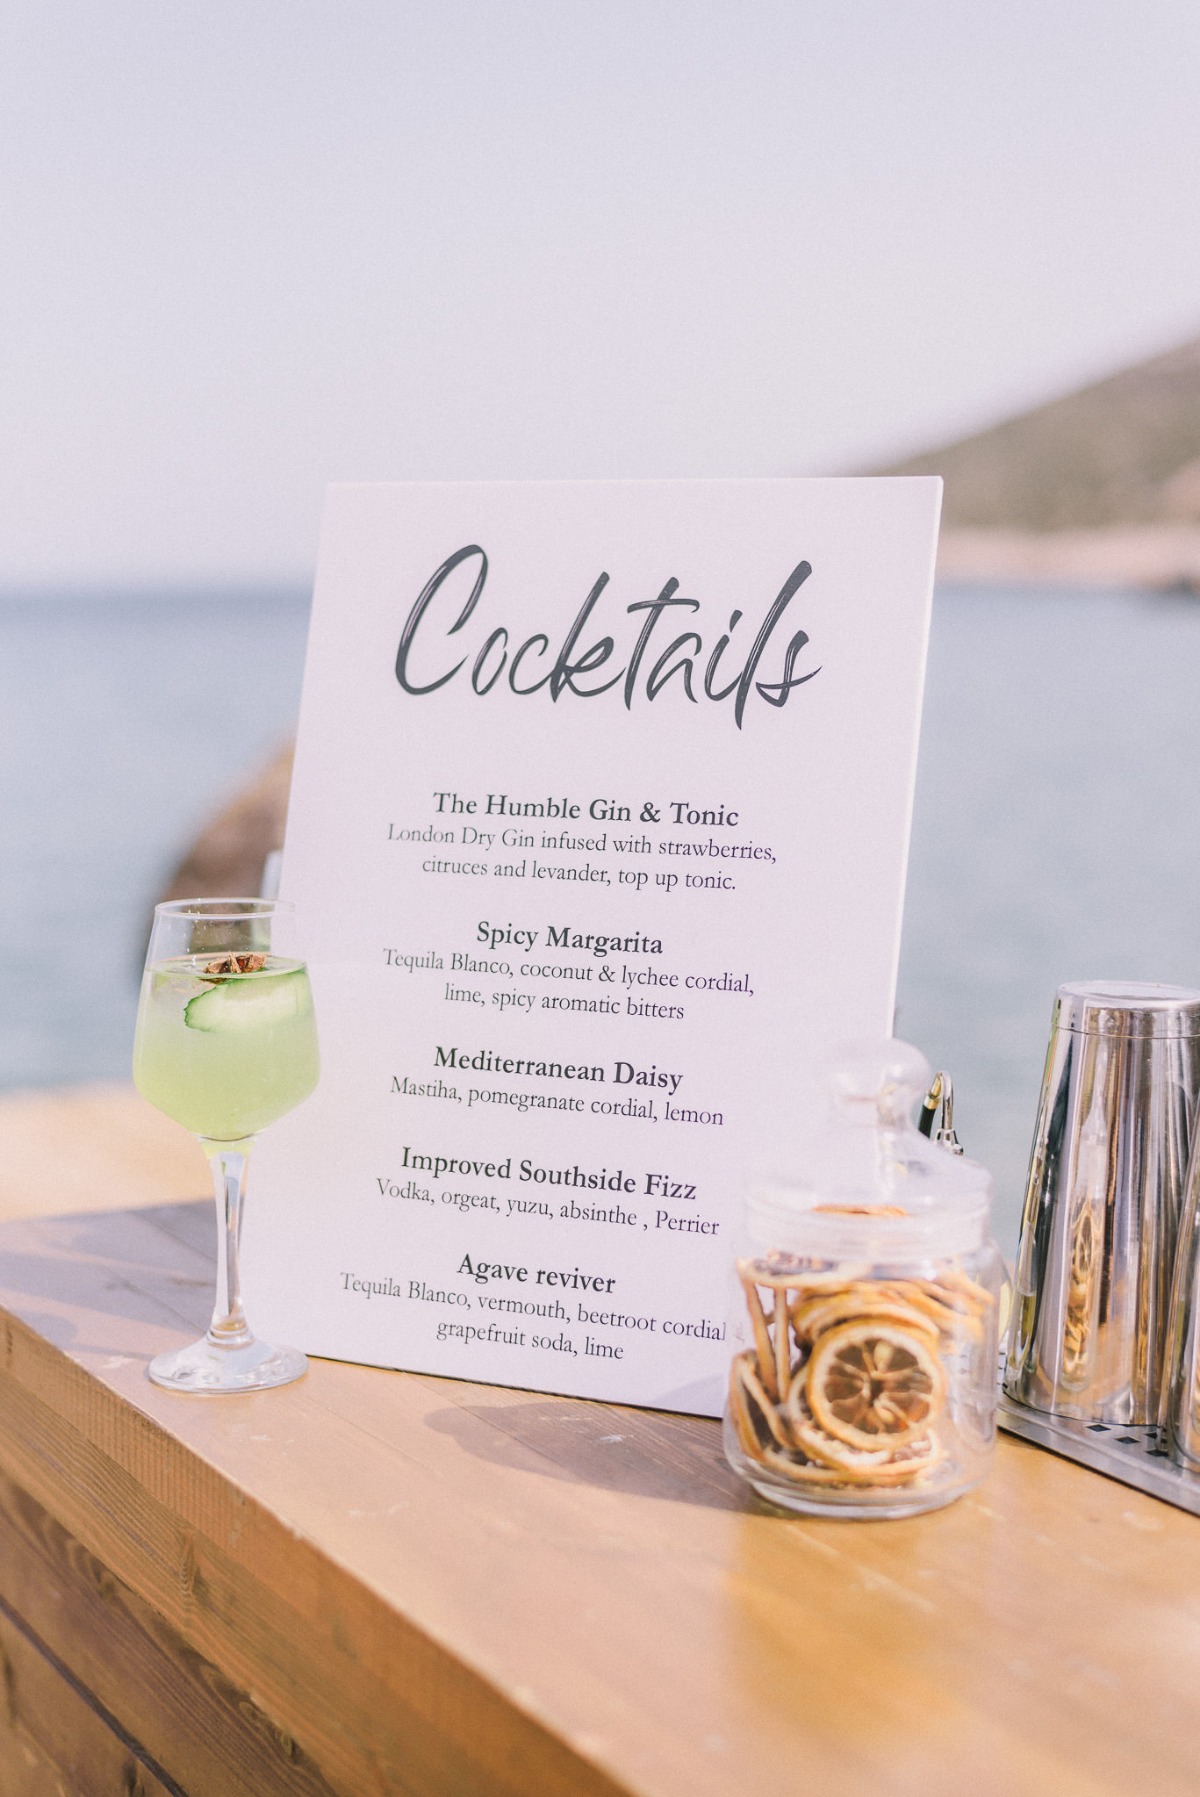 Pre-ceremony cocktails